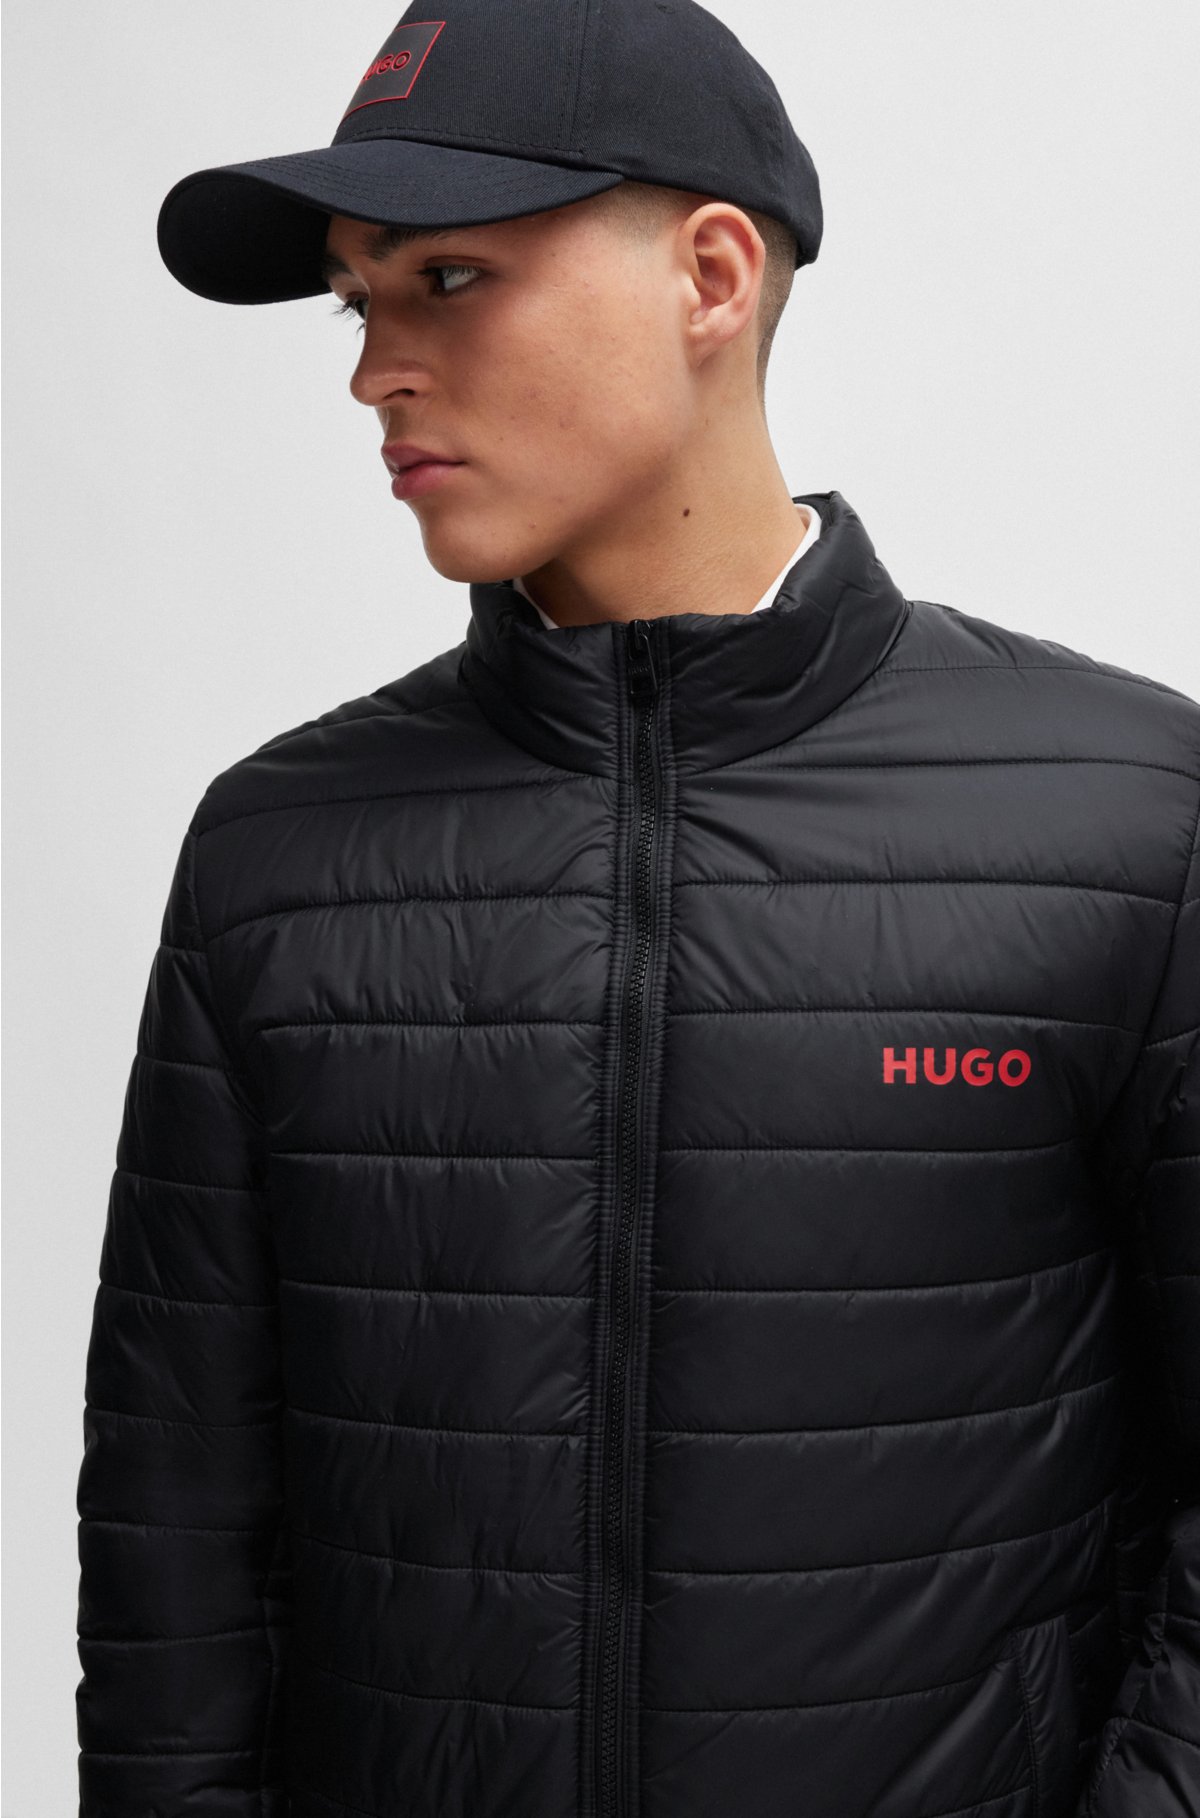 Boss by Hugo Boss Men's Water-Repellent Quilted Jacket